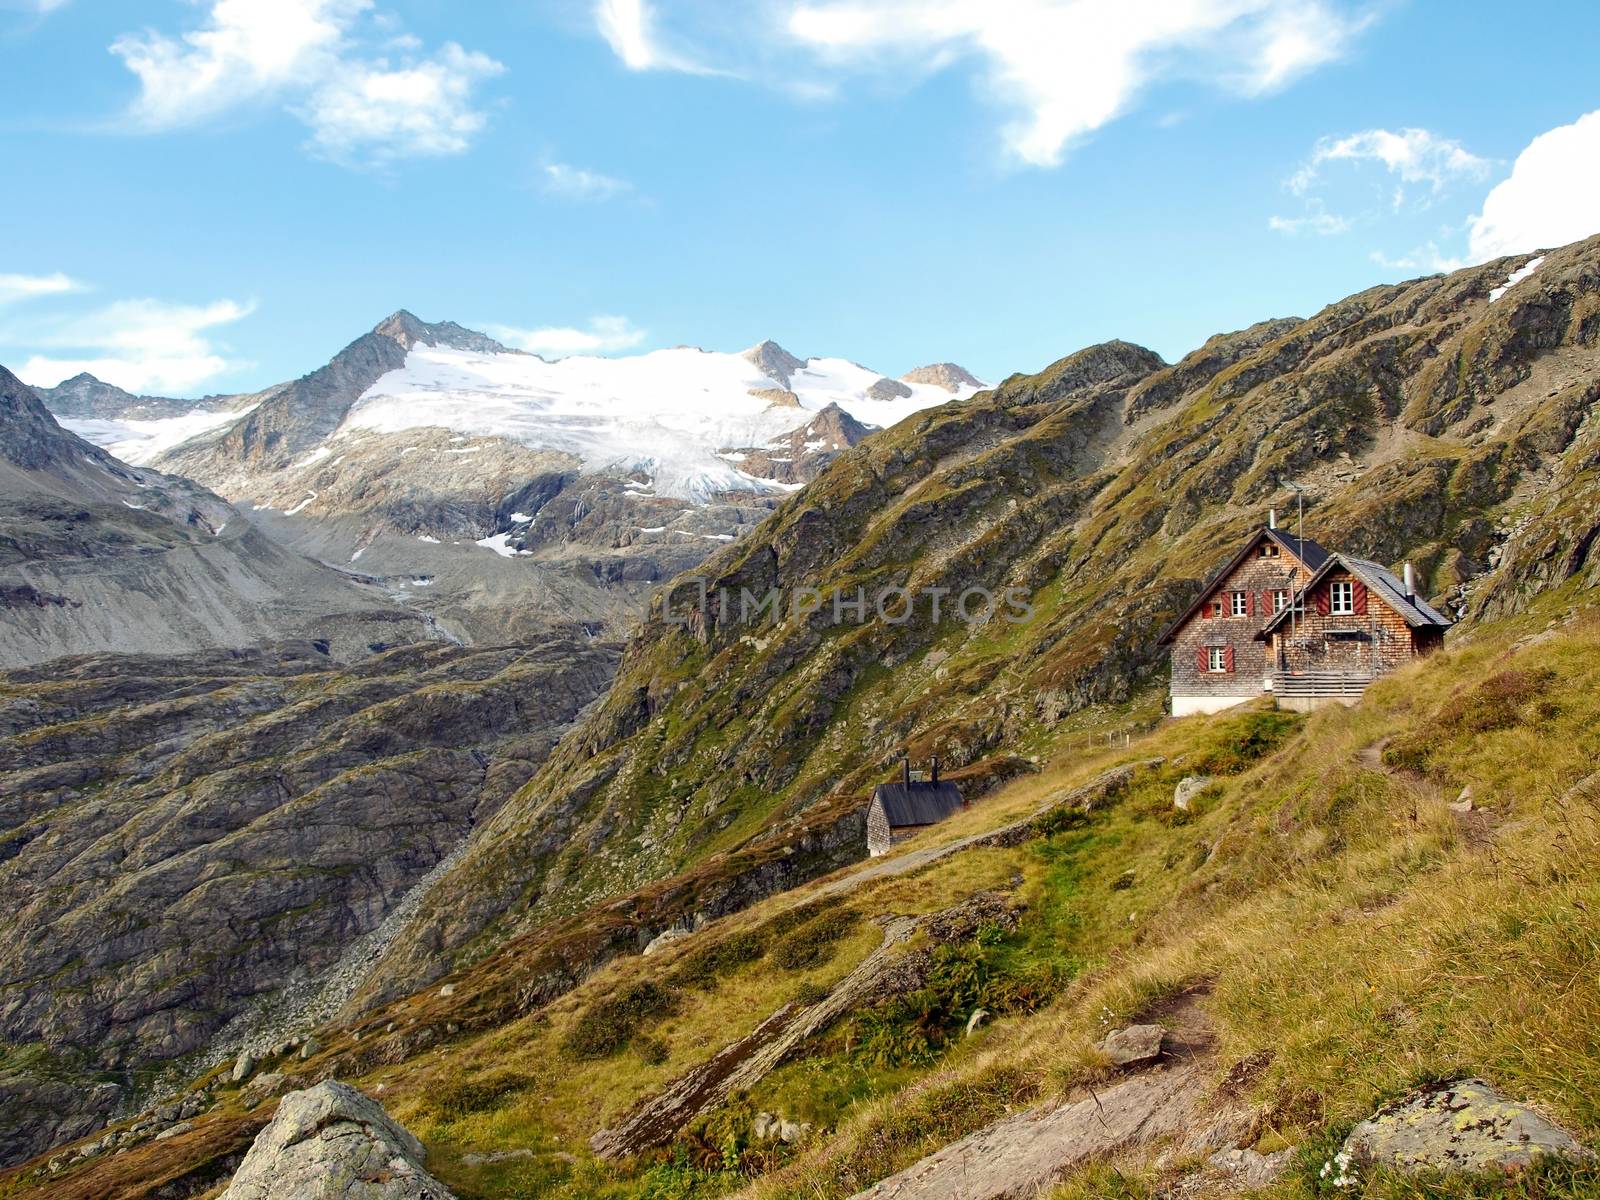 alpine gauli house on the glacier mountains, switzerland alps by evolutionnow